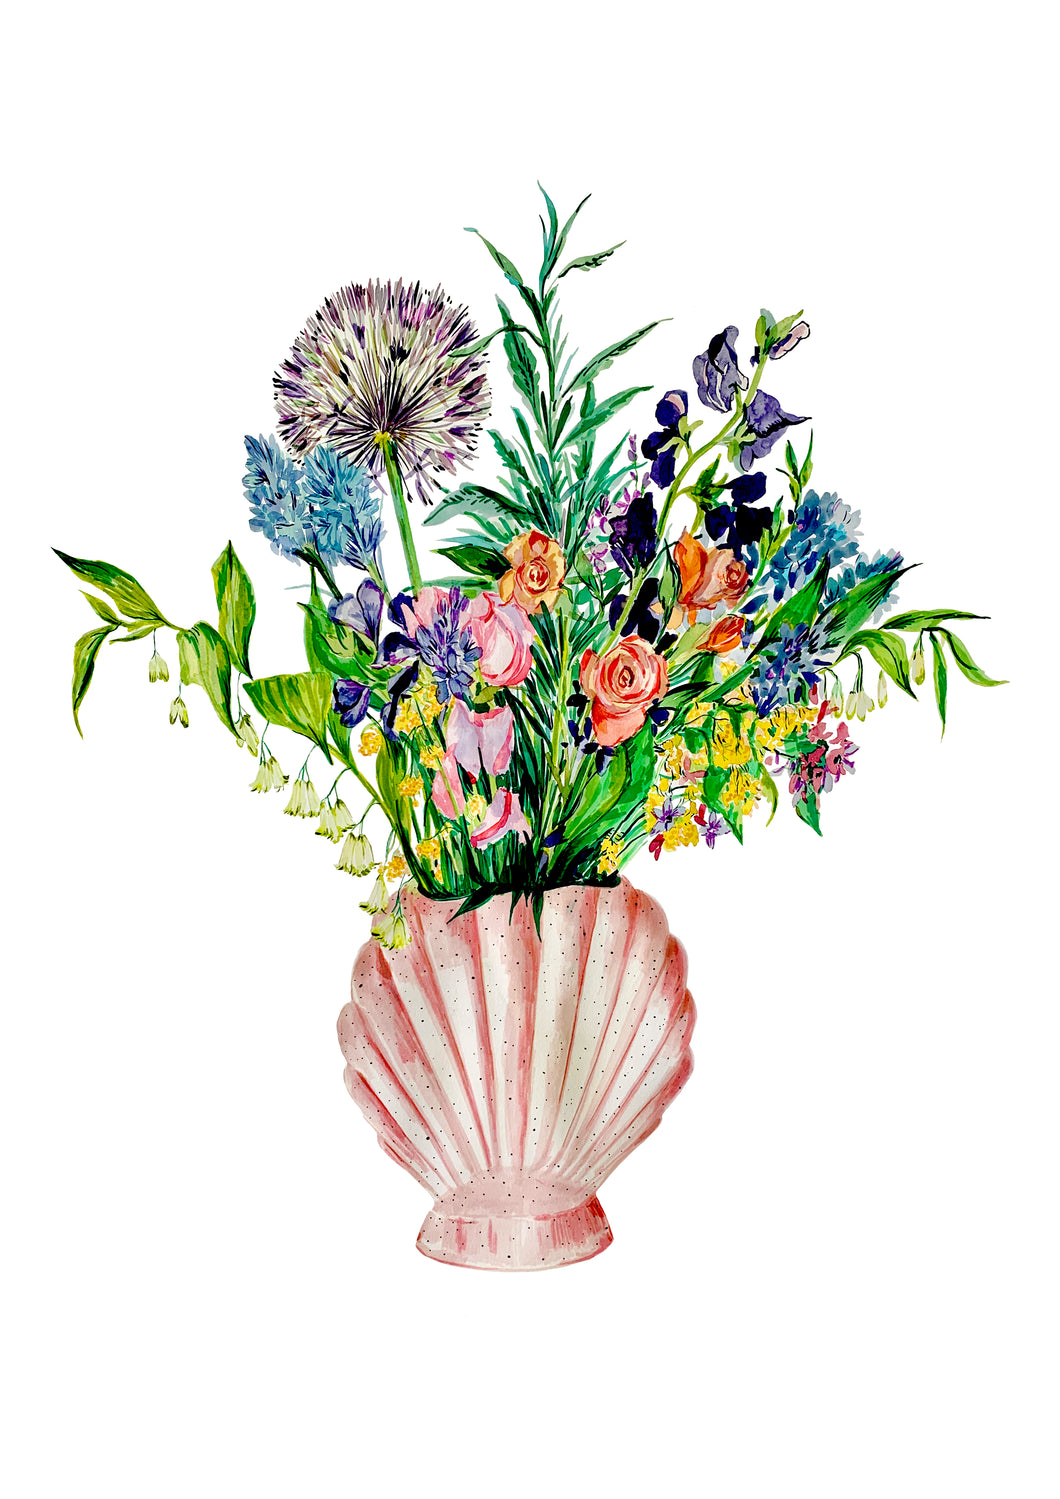 Shell Vase Of Garden Blooms Giclée Print